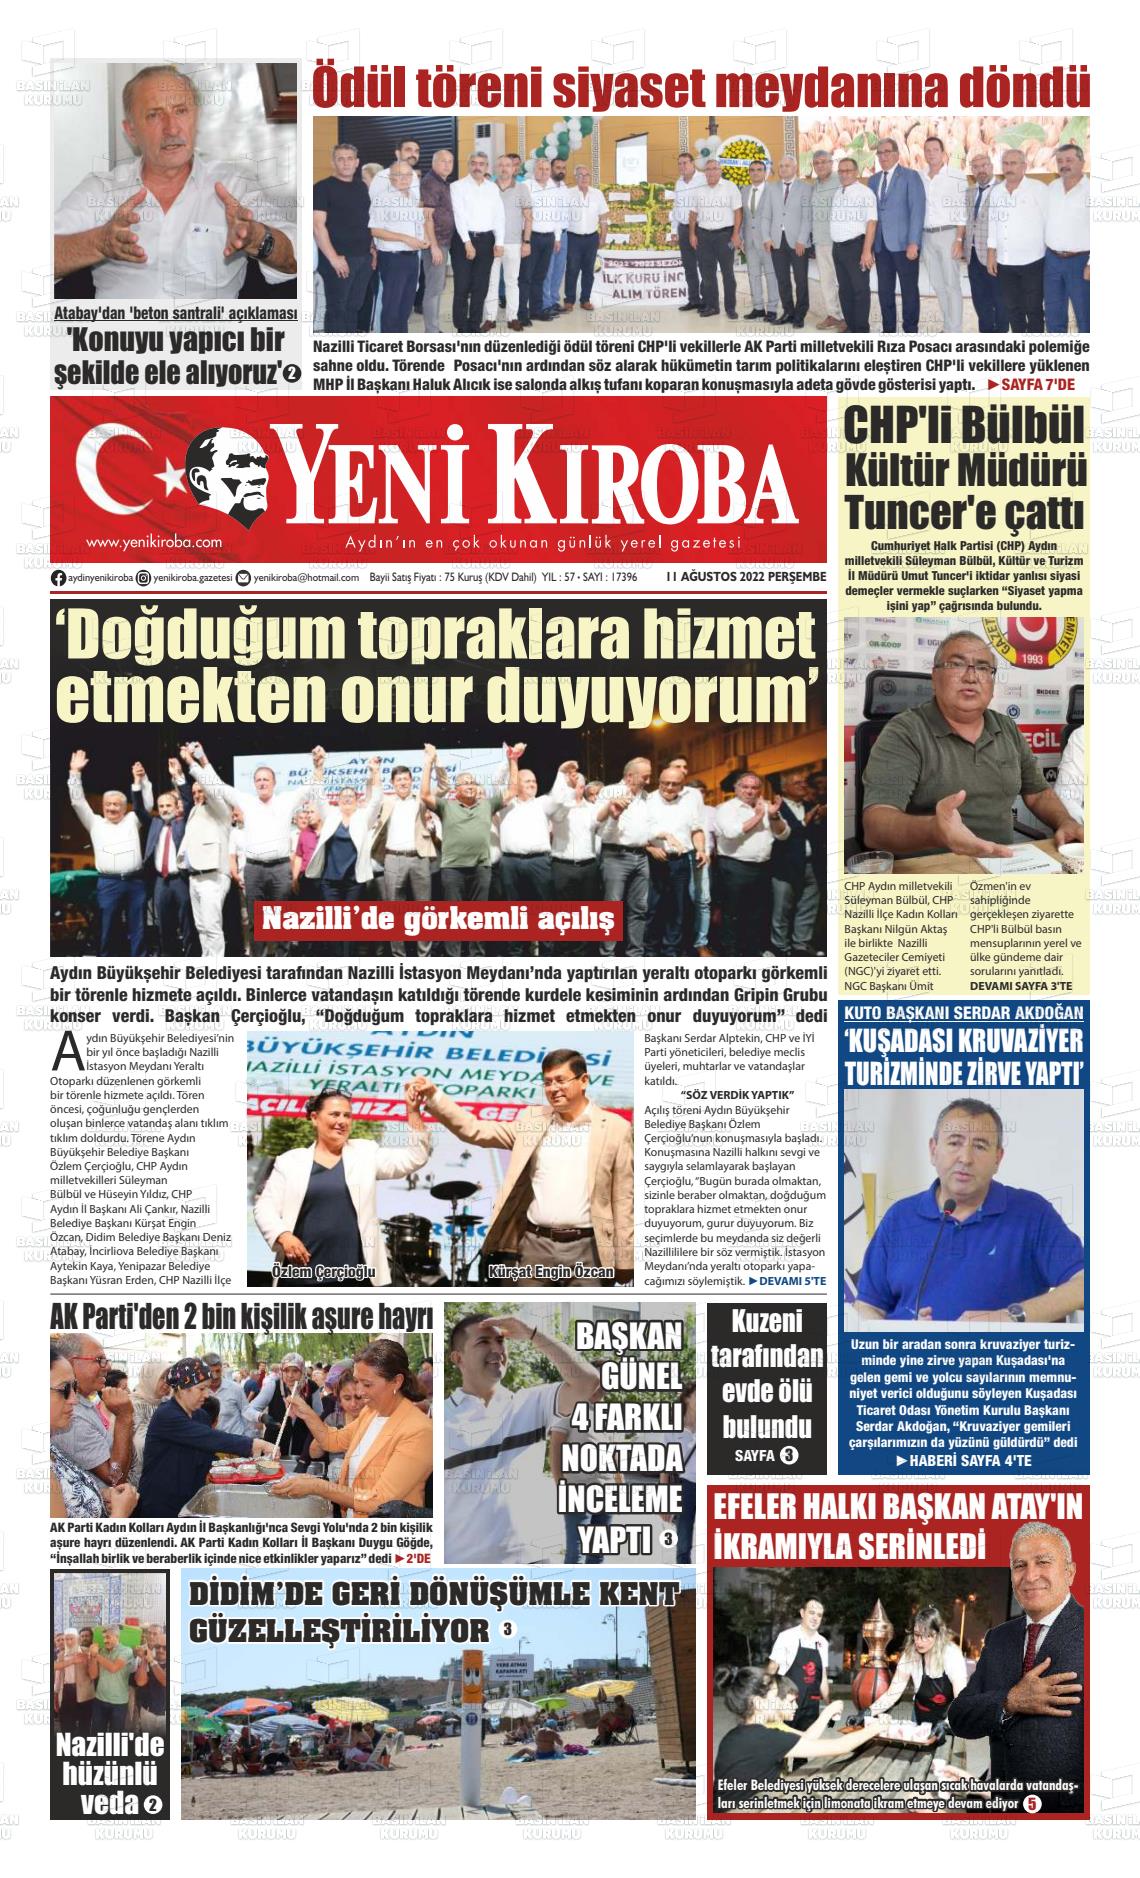 11 Ağustos 2022 Yeni Kıroba Gazete Manşeti